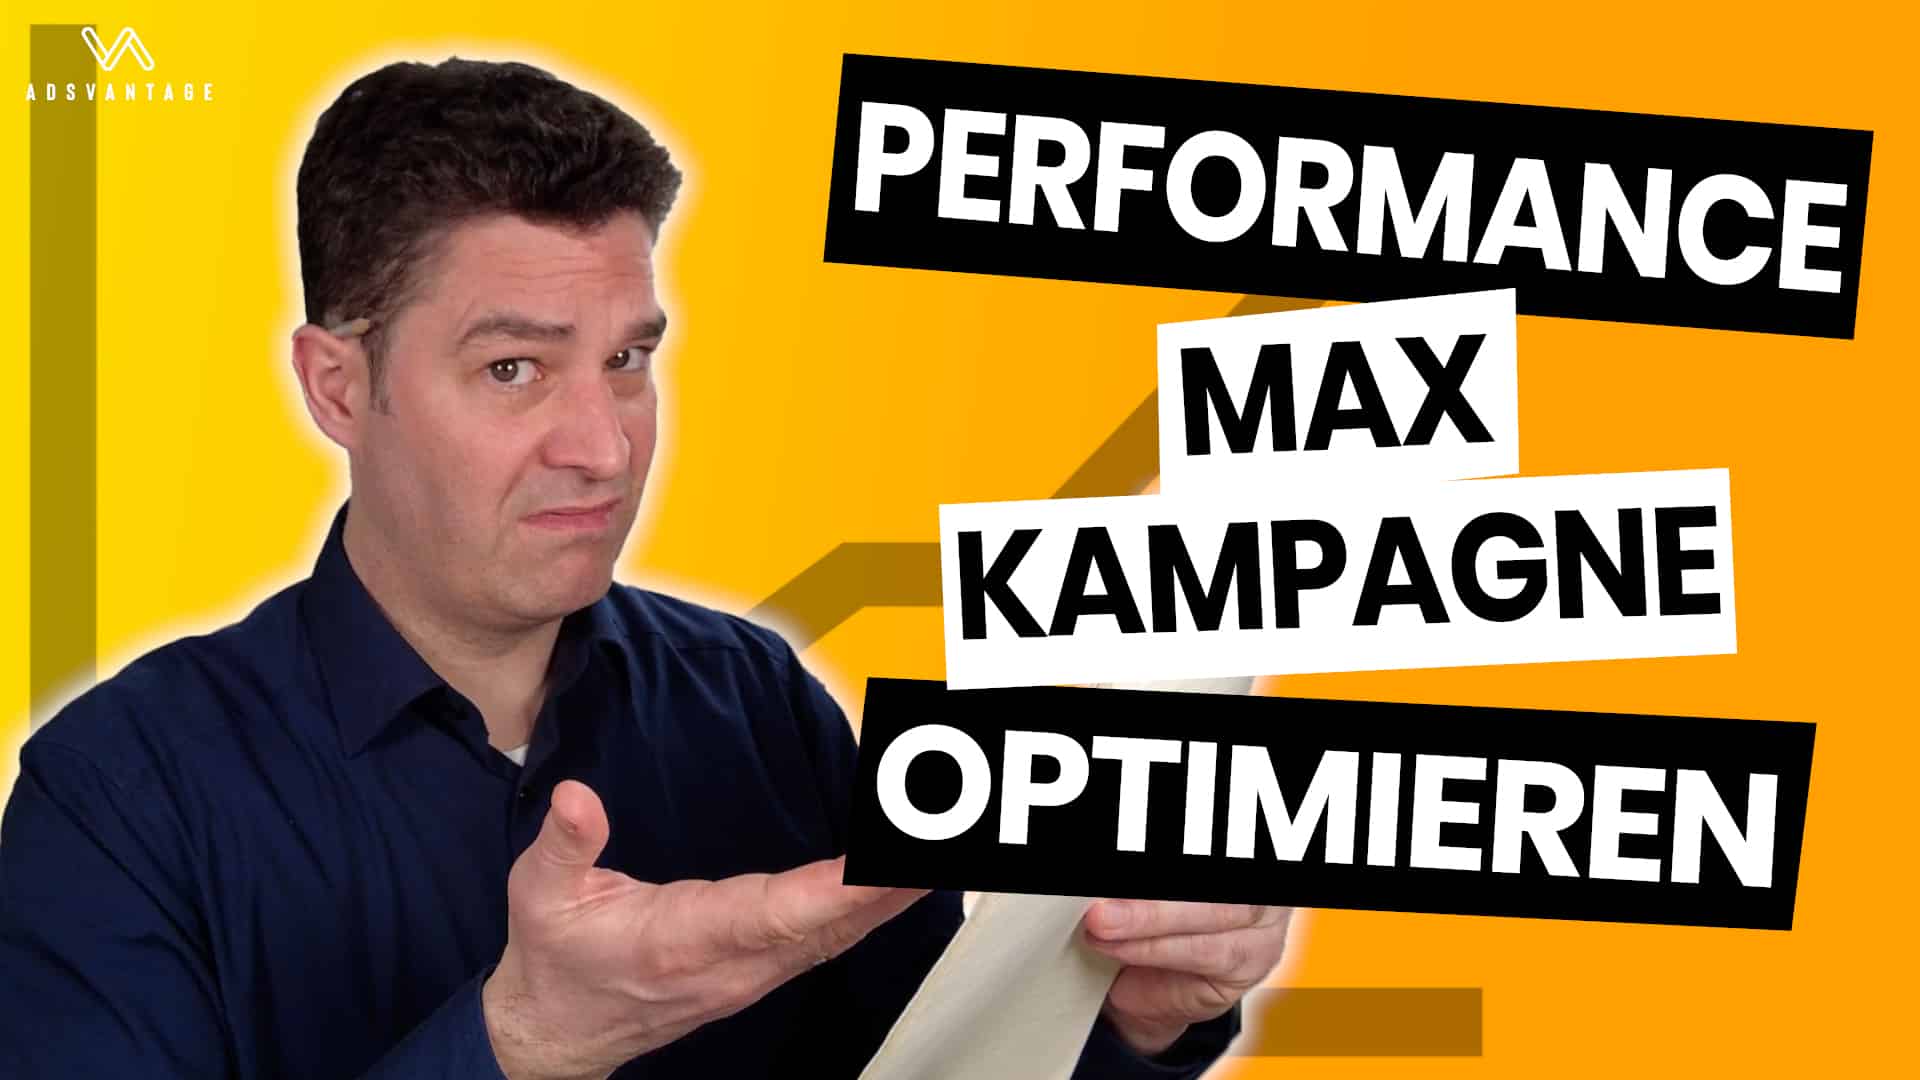 Performance Max Kampagne optimieren – Best Practices